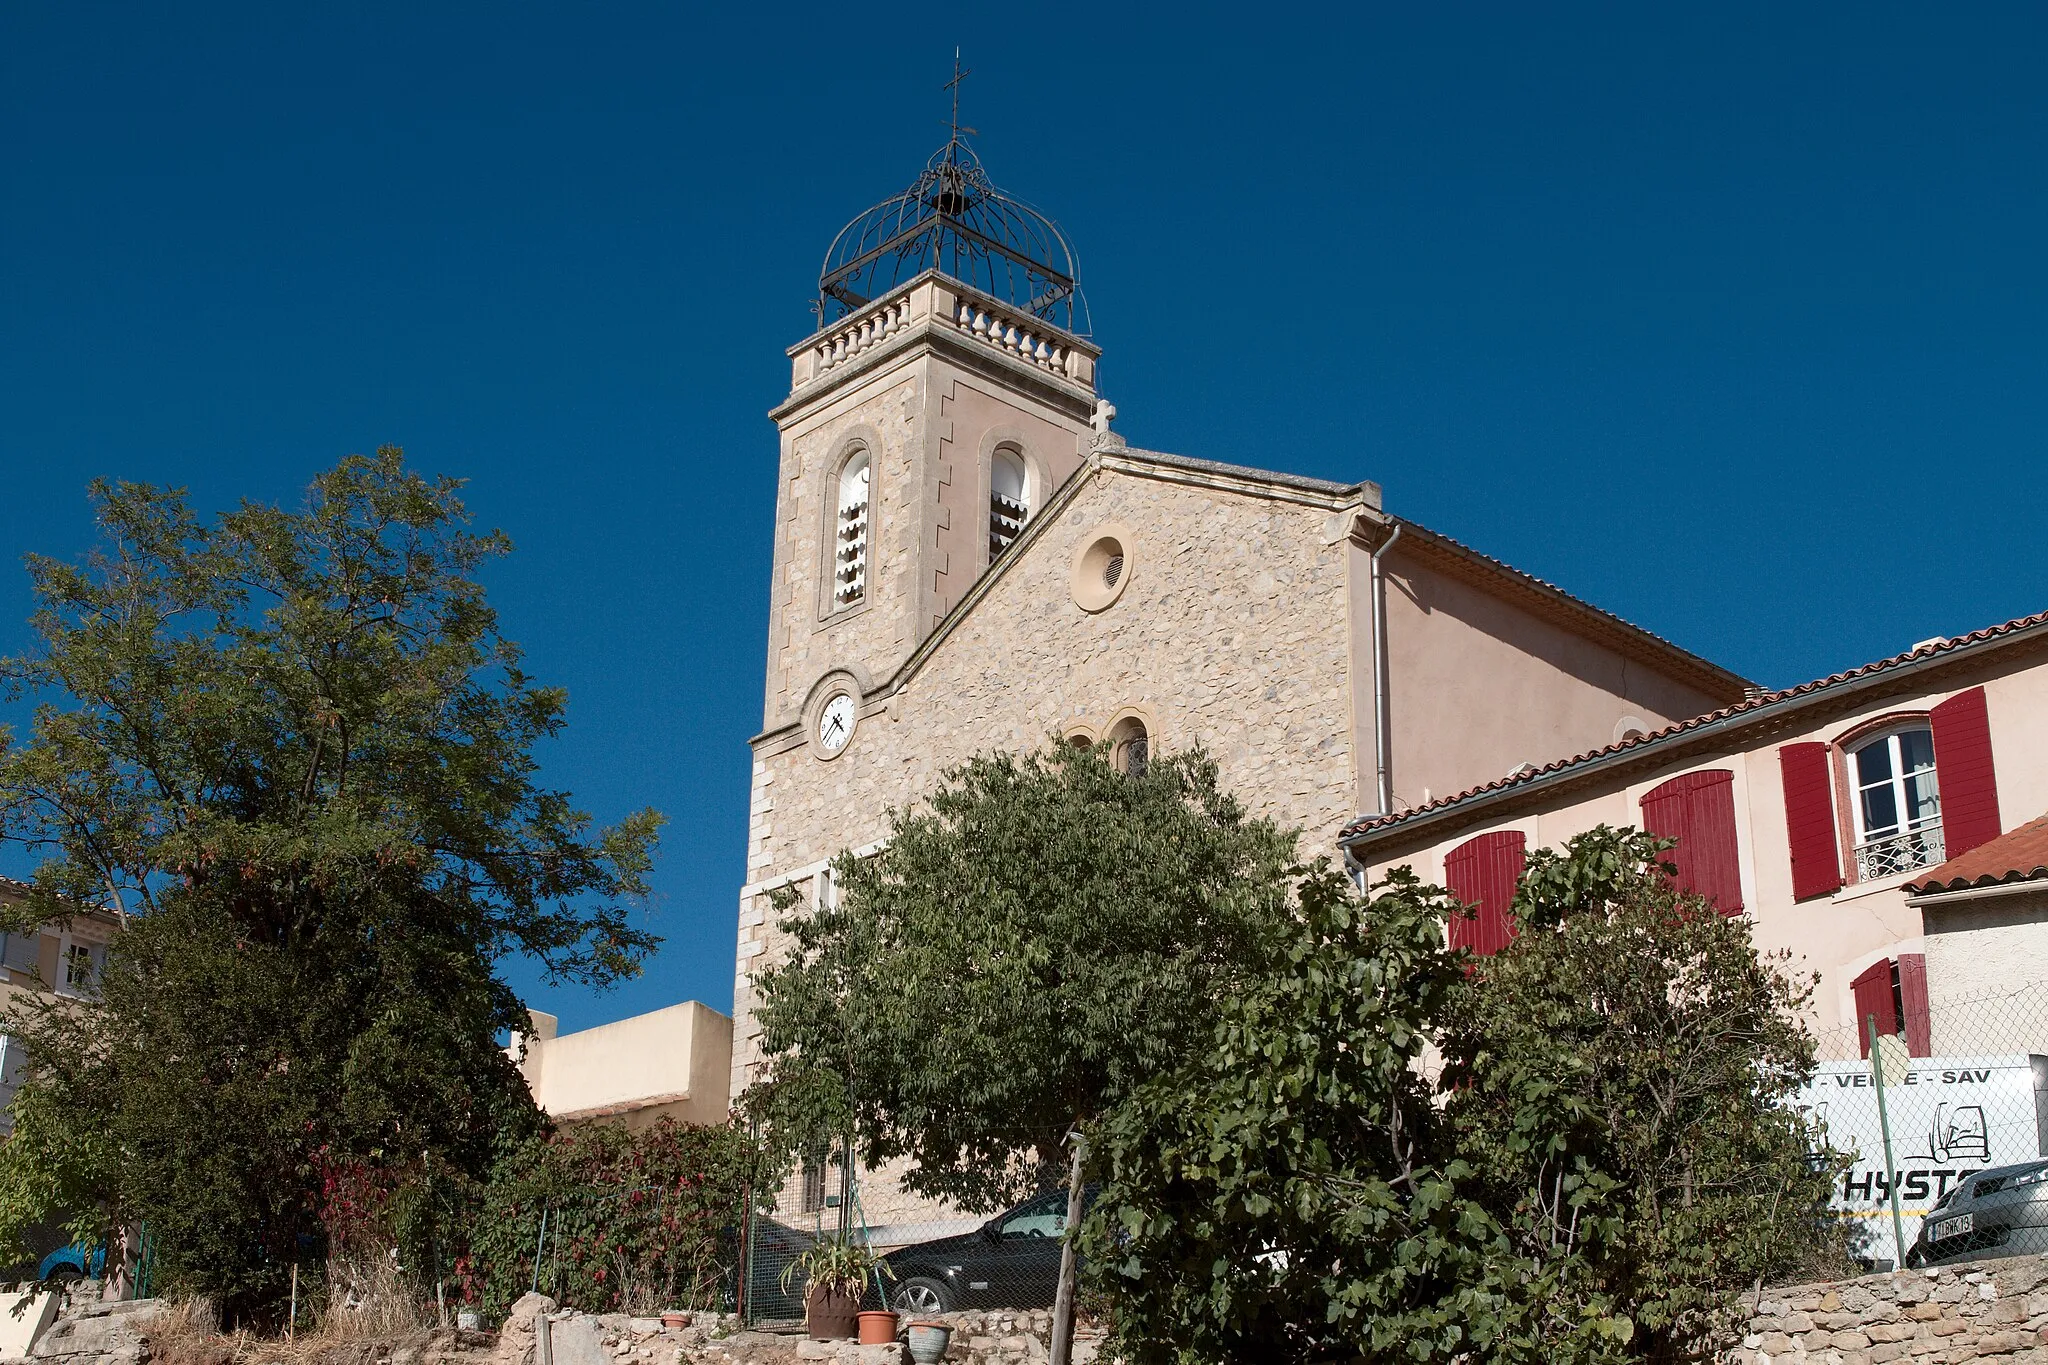 Photo showing: The church Saint-Pons in Puyloubier, Bouches-du-Rhône (France).